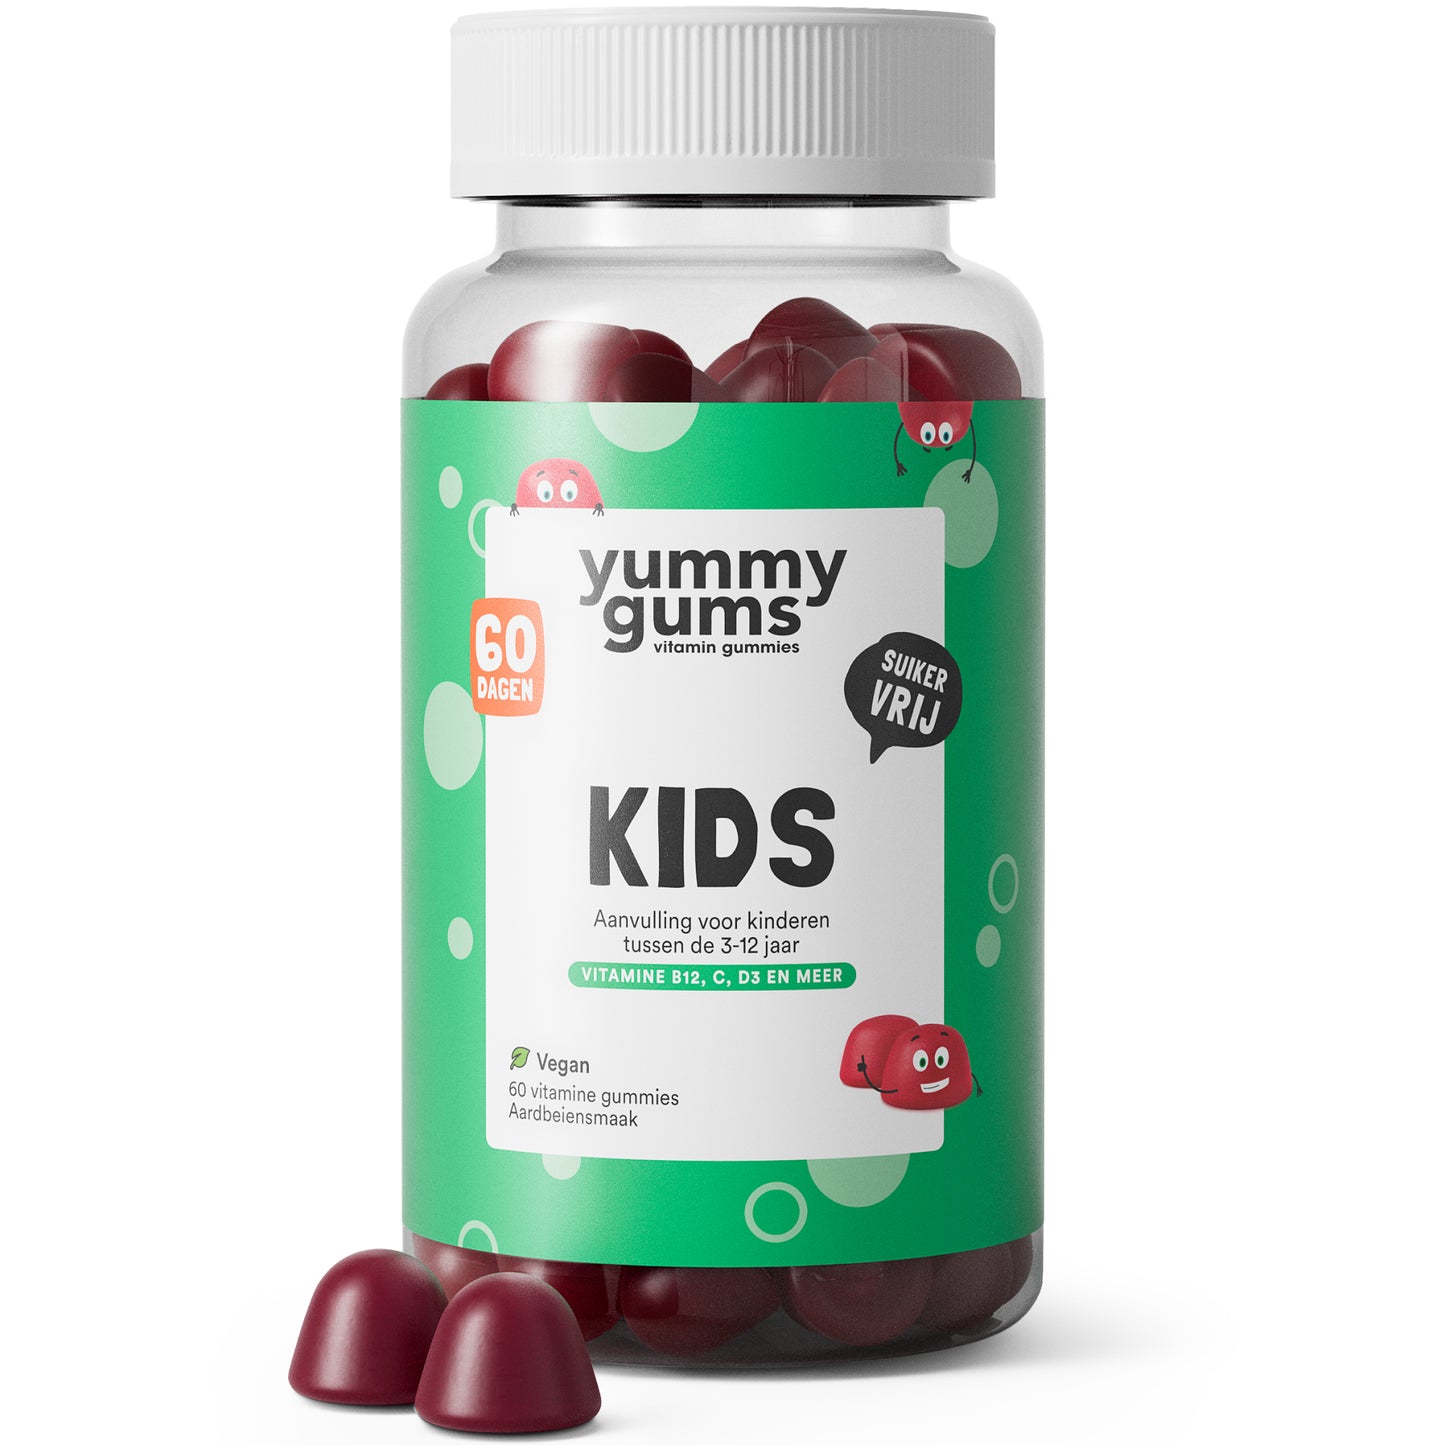 Yummygums - Kids